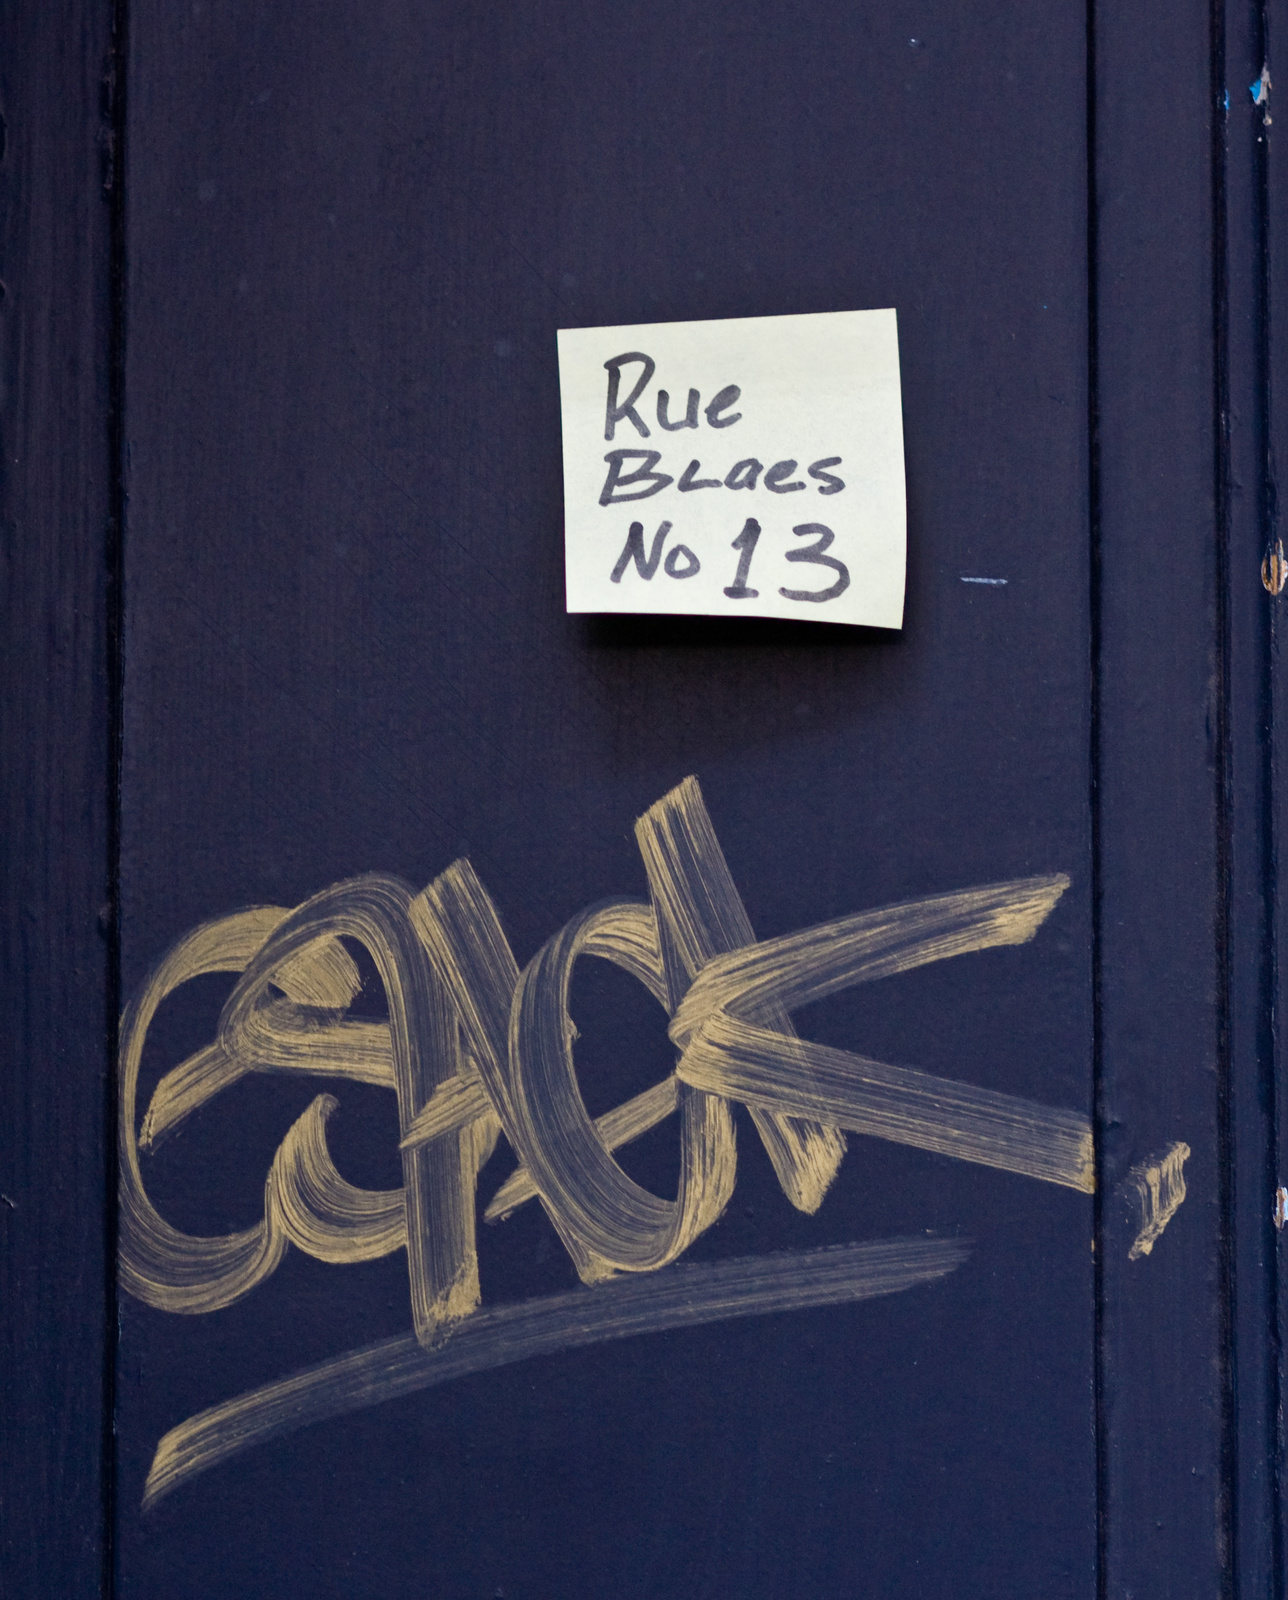 Rue Blaes No 13